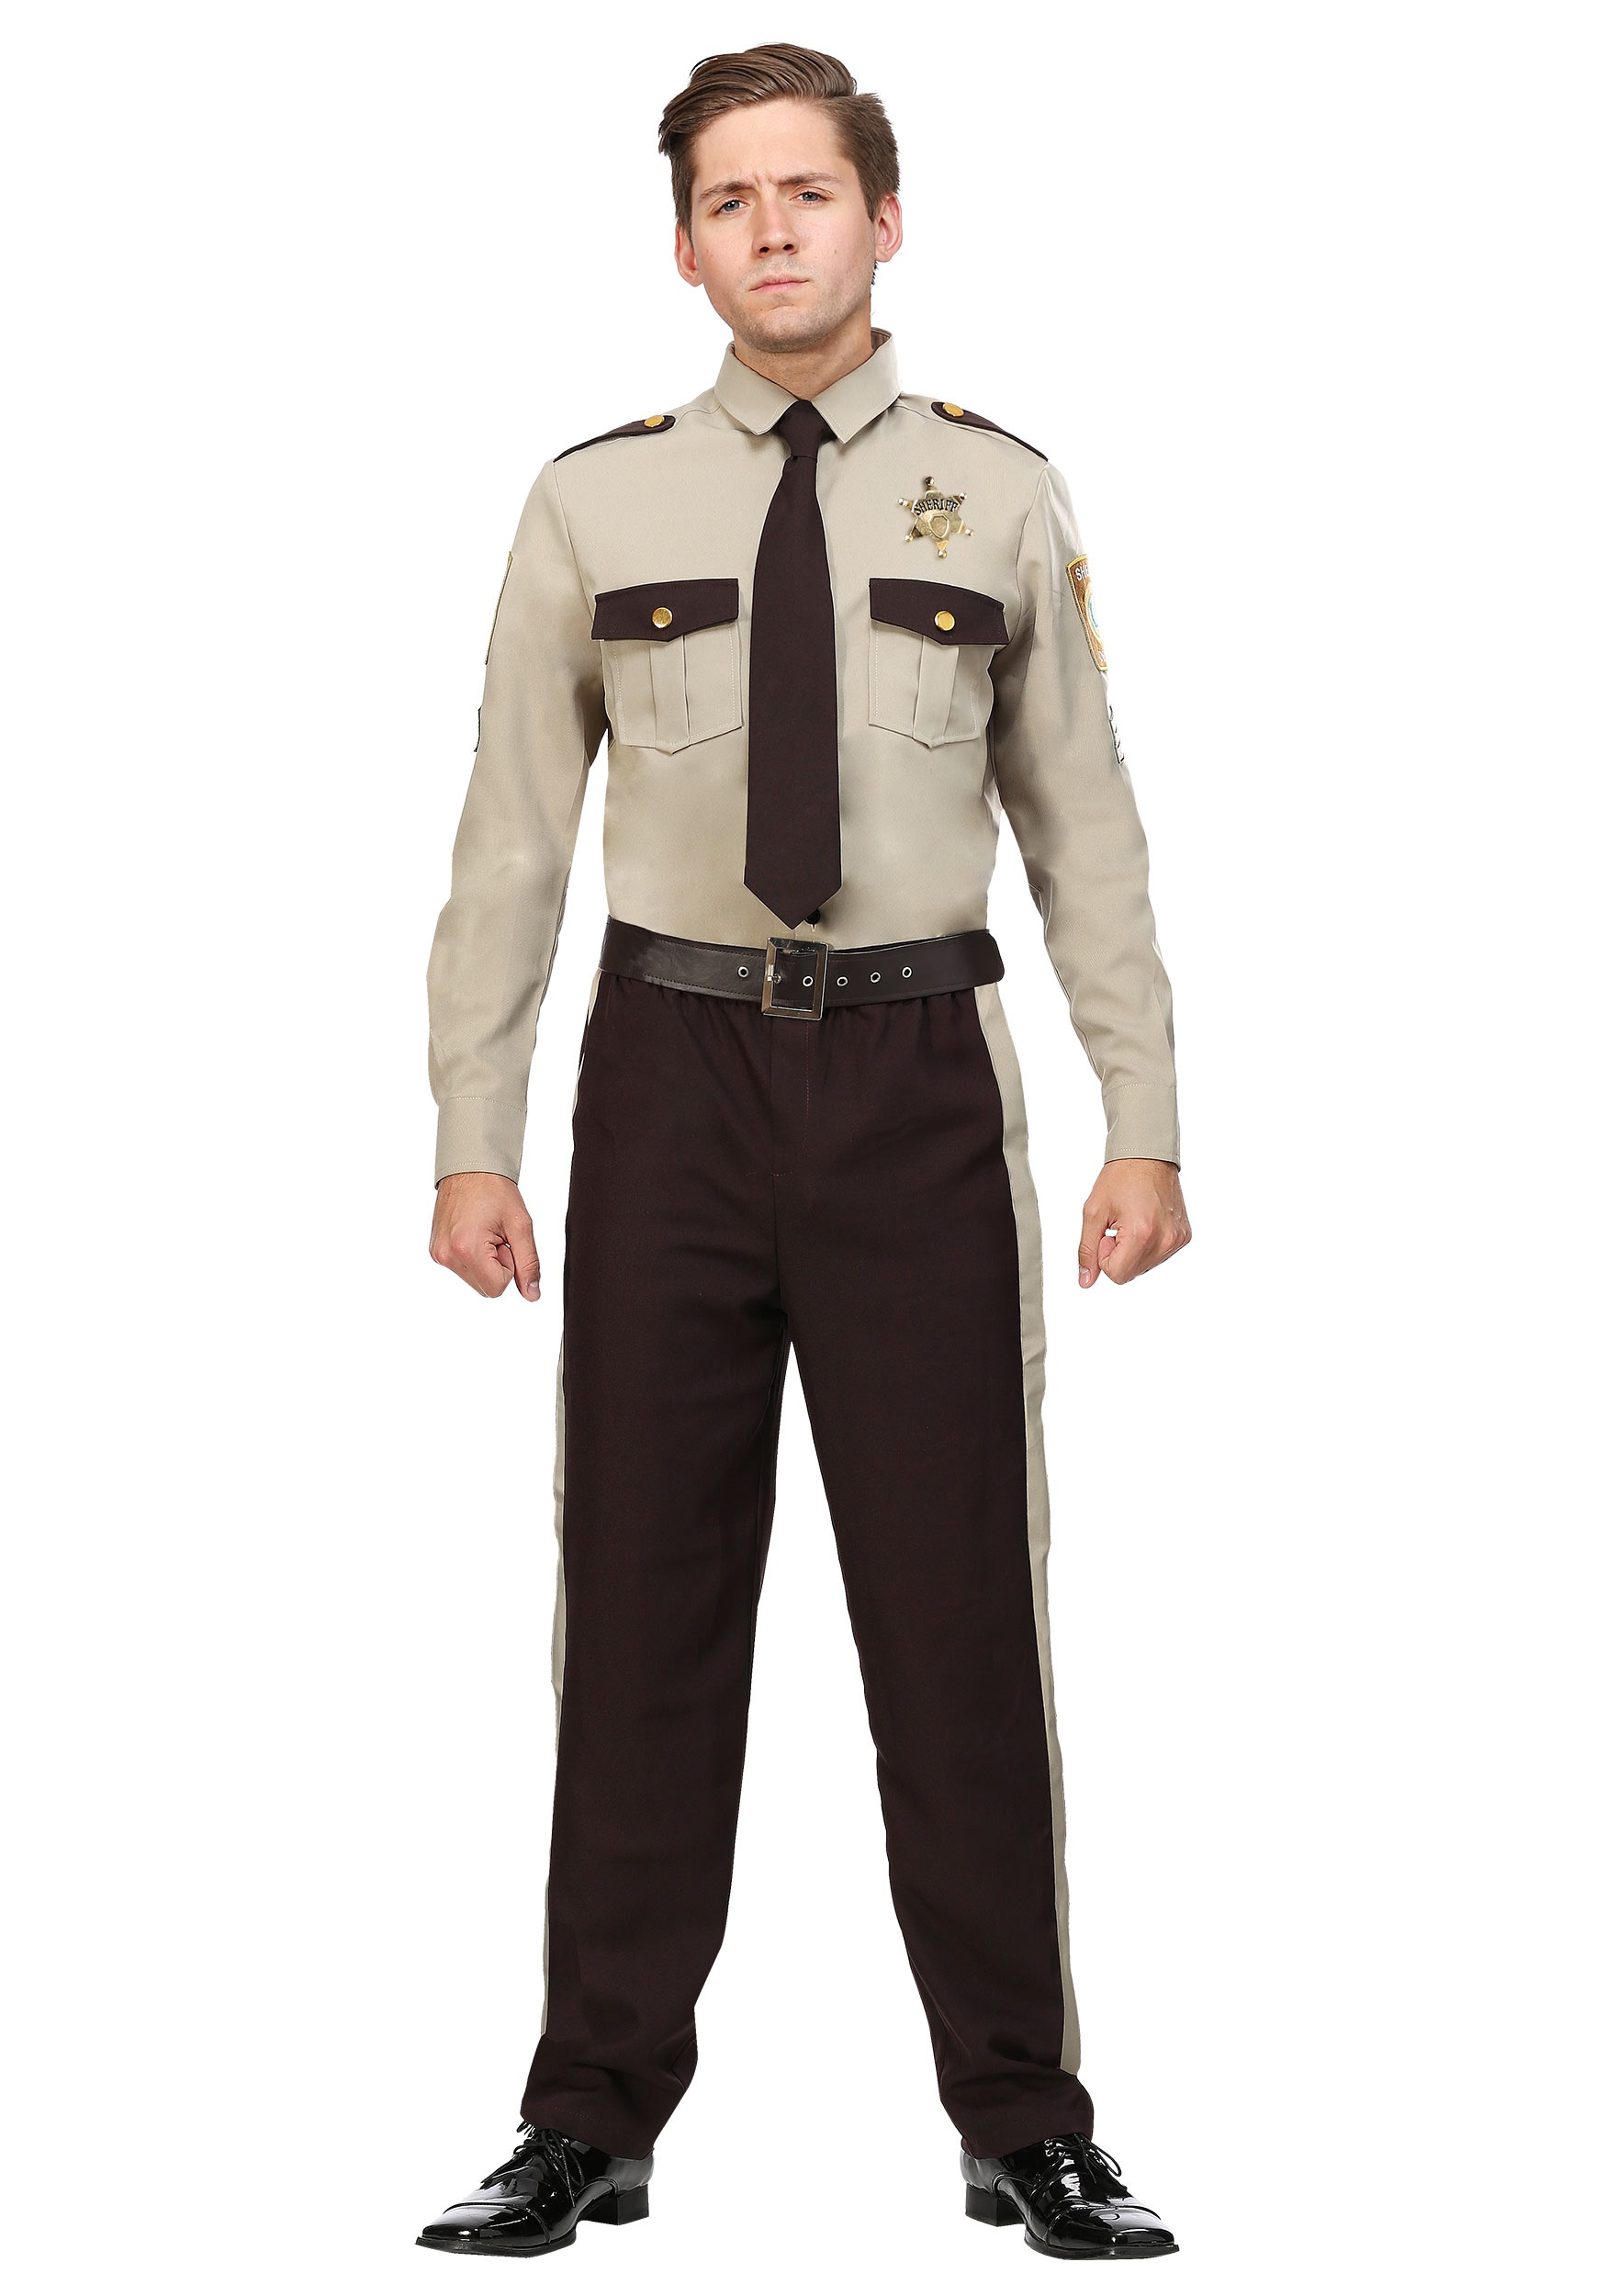 Plus Size Sheriff Costume for Men